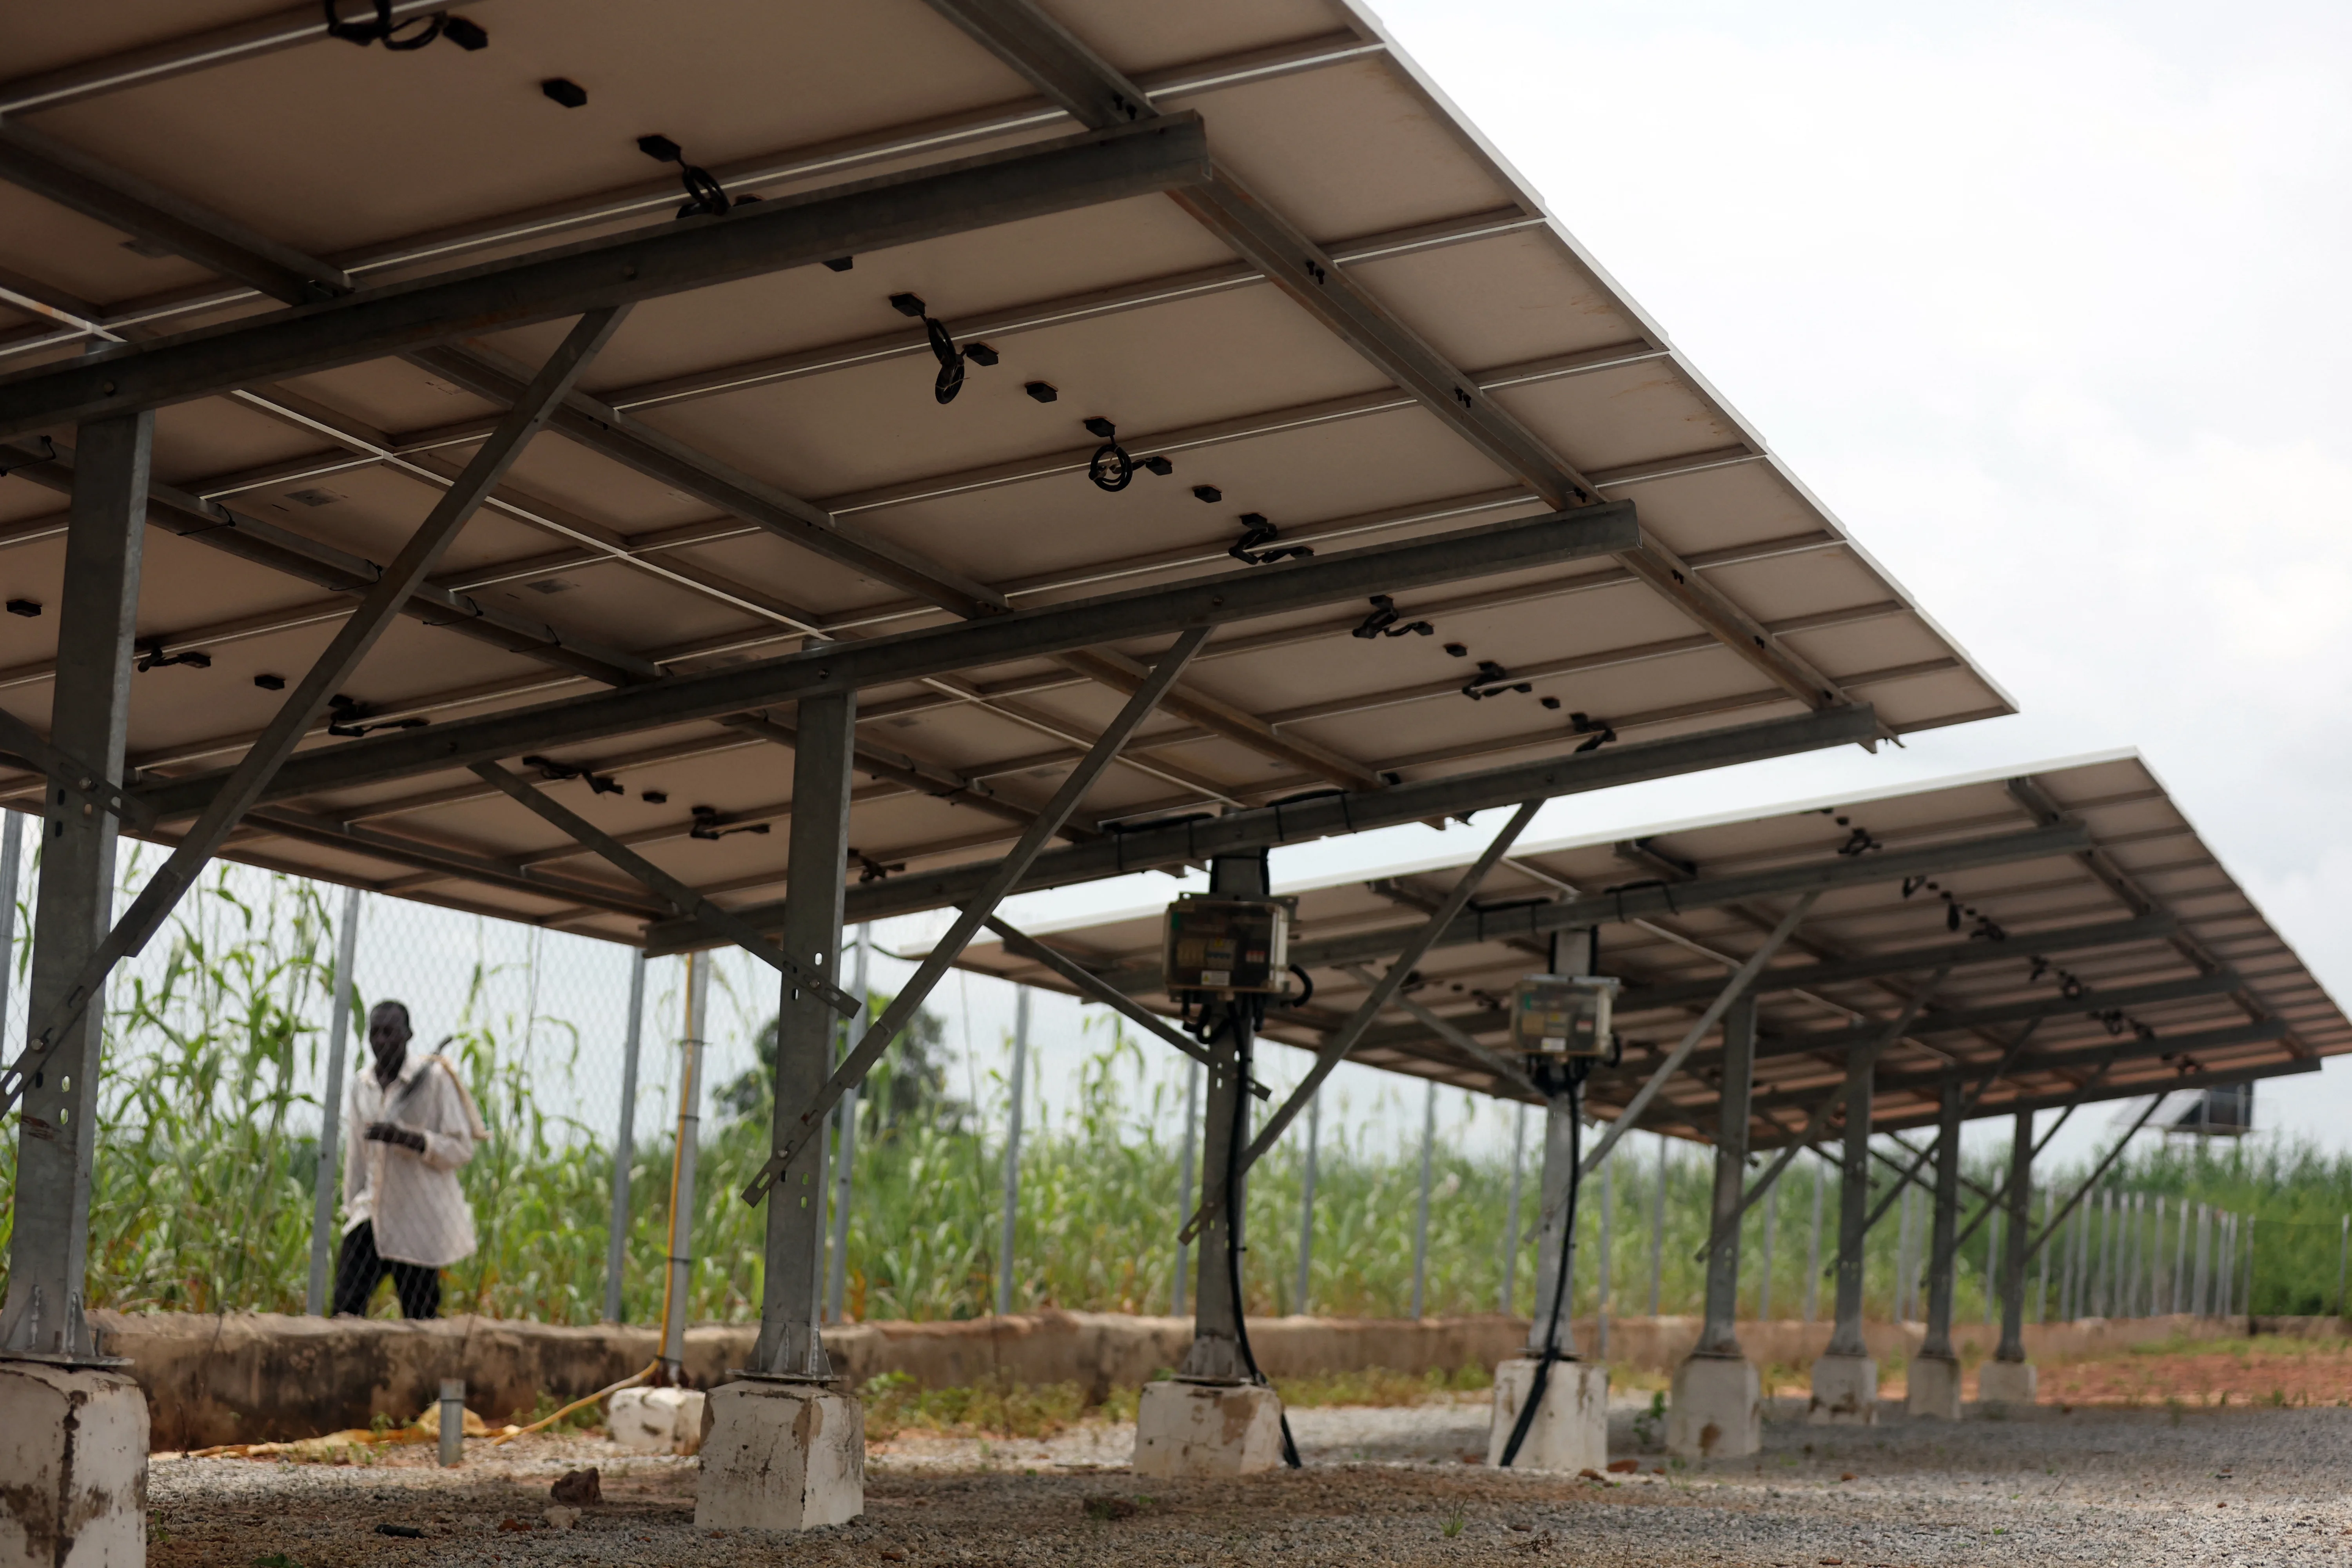 Nigeria’s shift to renewables picks up momentum